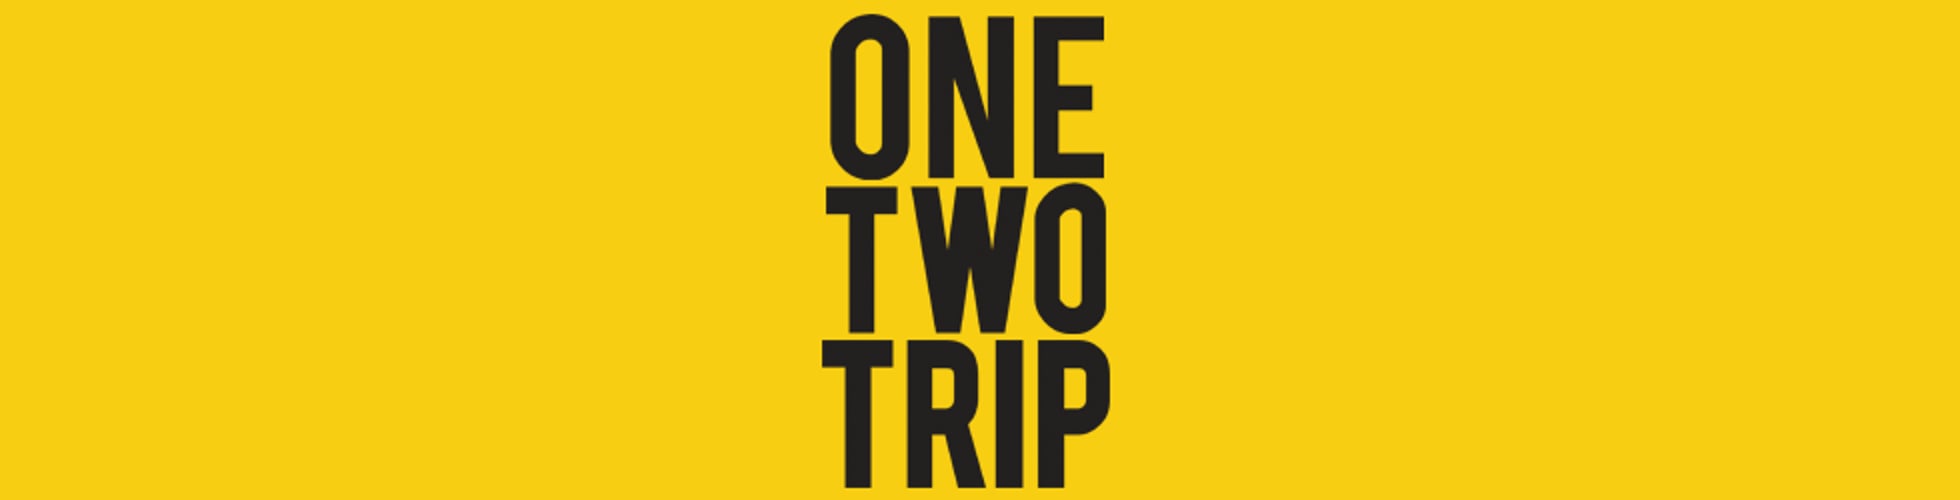 ONETWOTRIP лого. One two trip. ONETWOTRIP лого вектор. One to trip логотип.